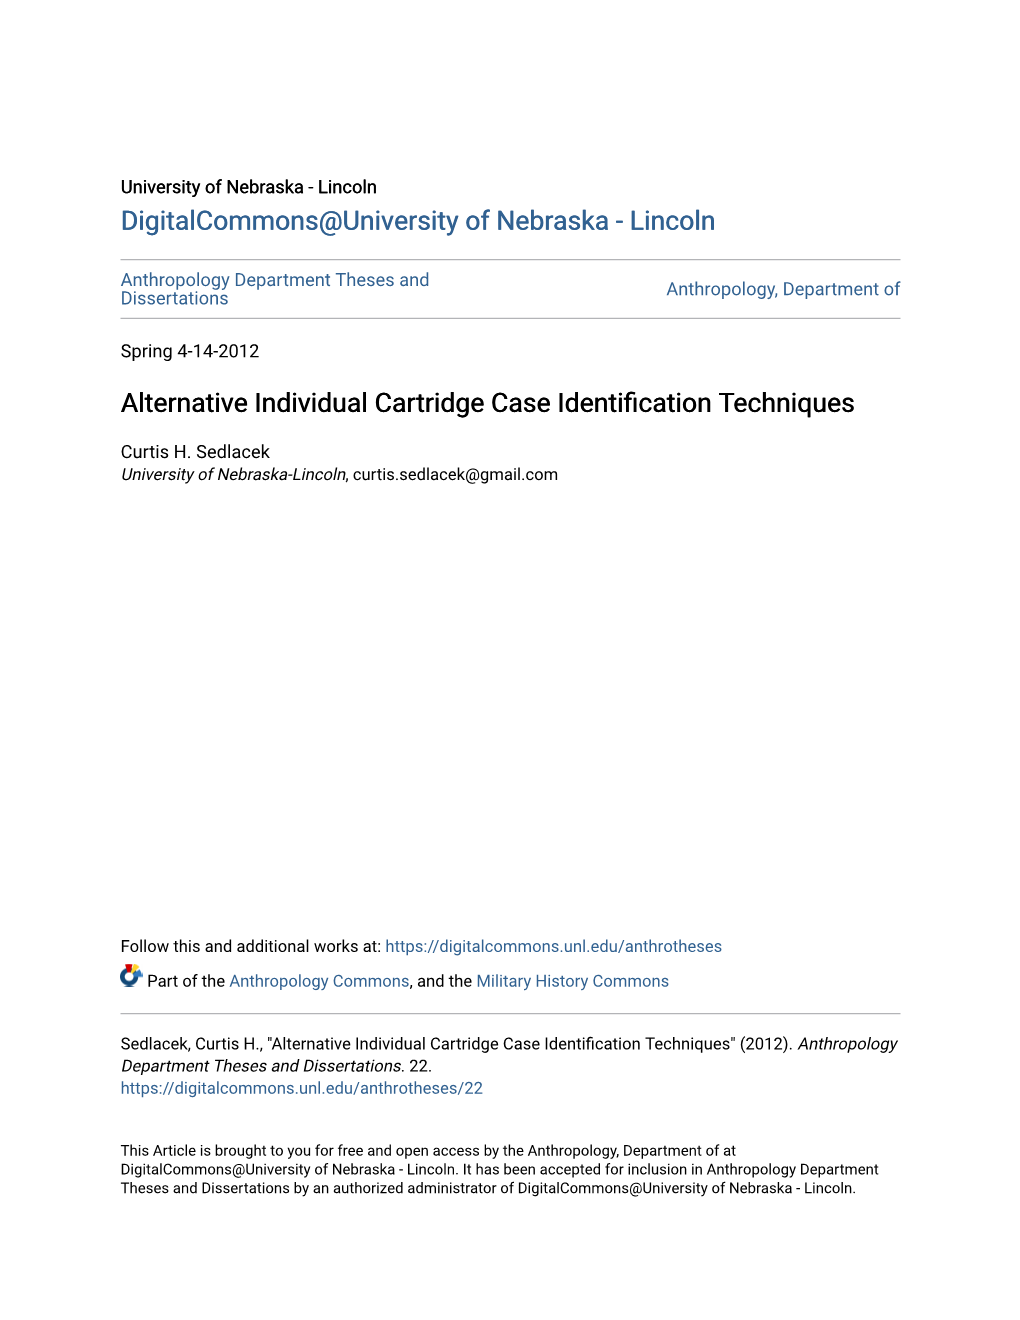 Alternative Individual Cartridge Case Identification Techniques